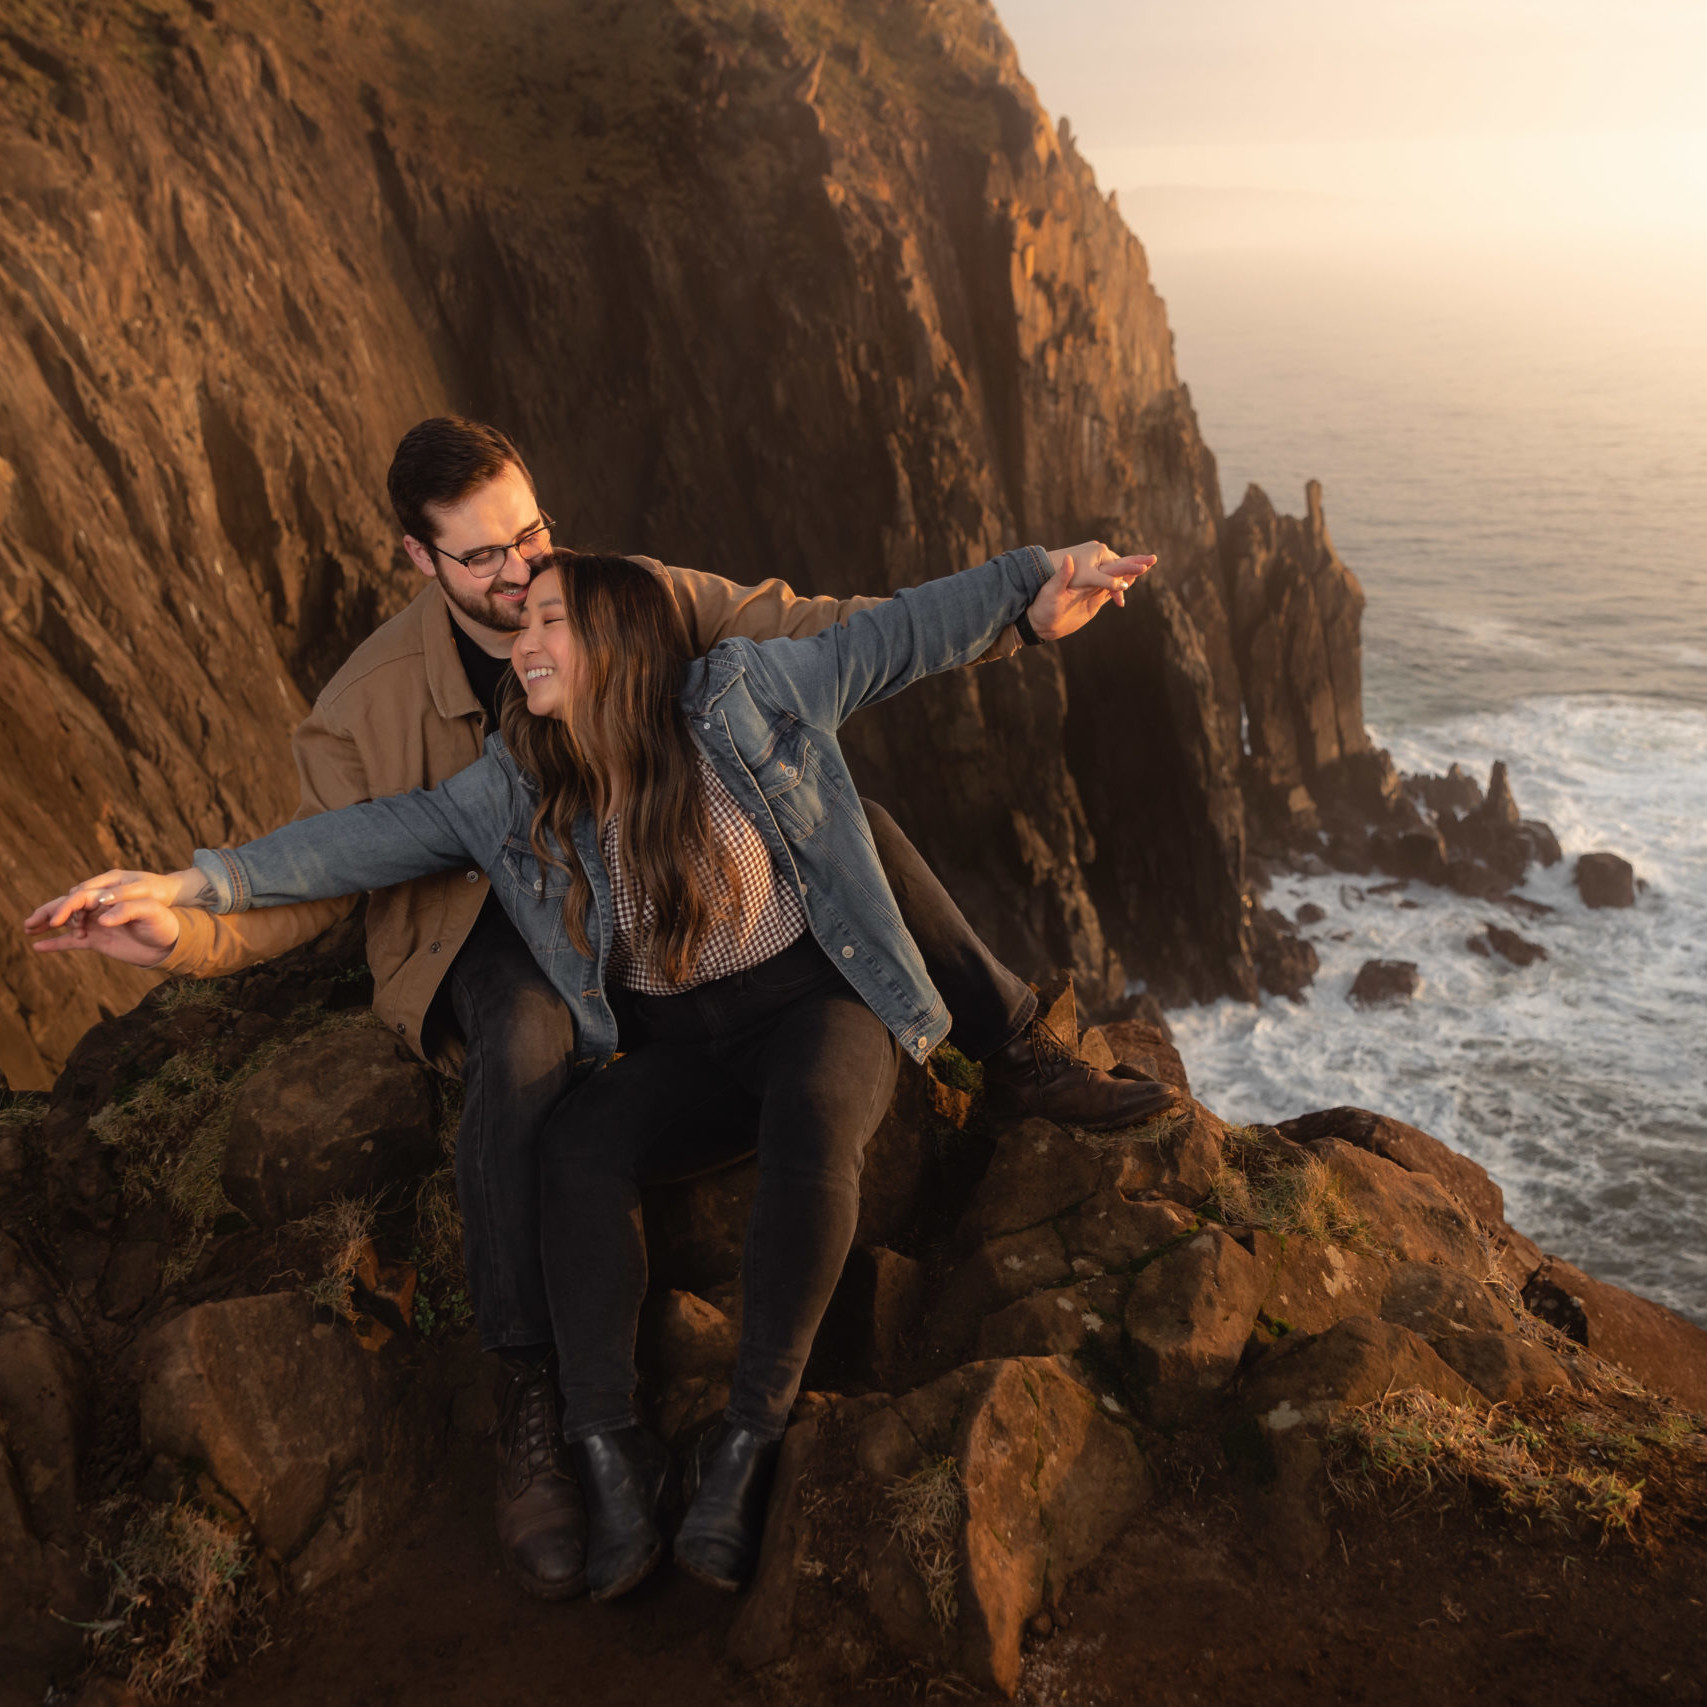 Engagement photography shot at Manzanita Cliffs on the Oregon Coast